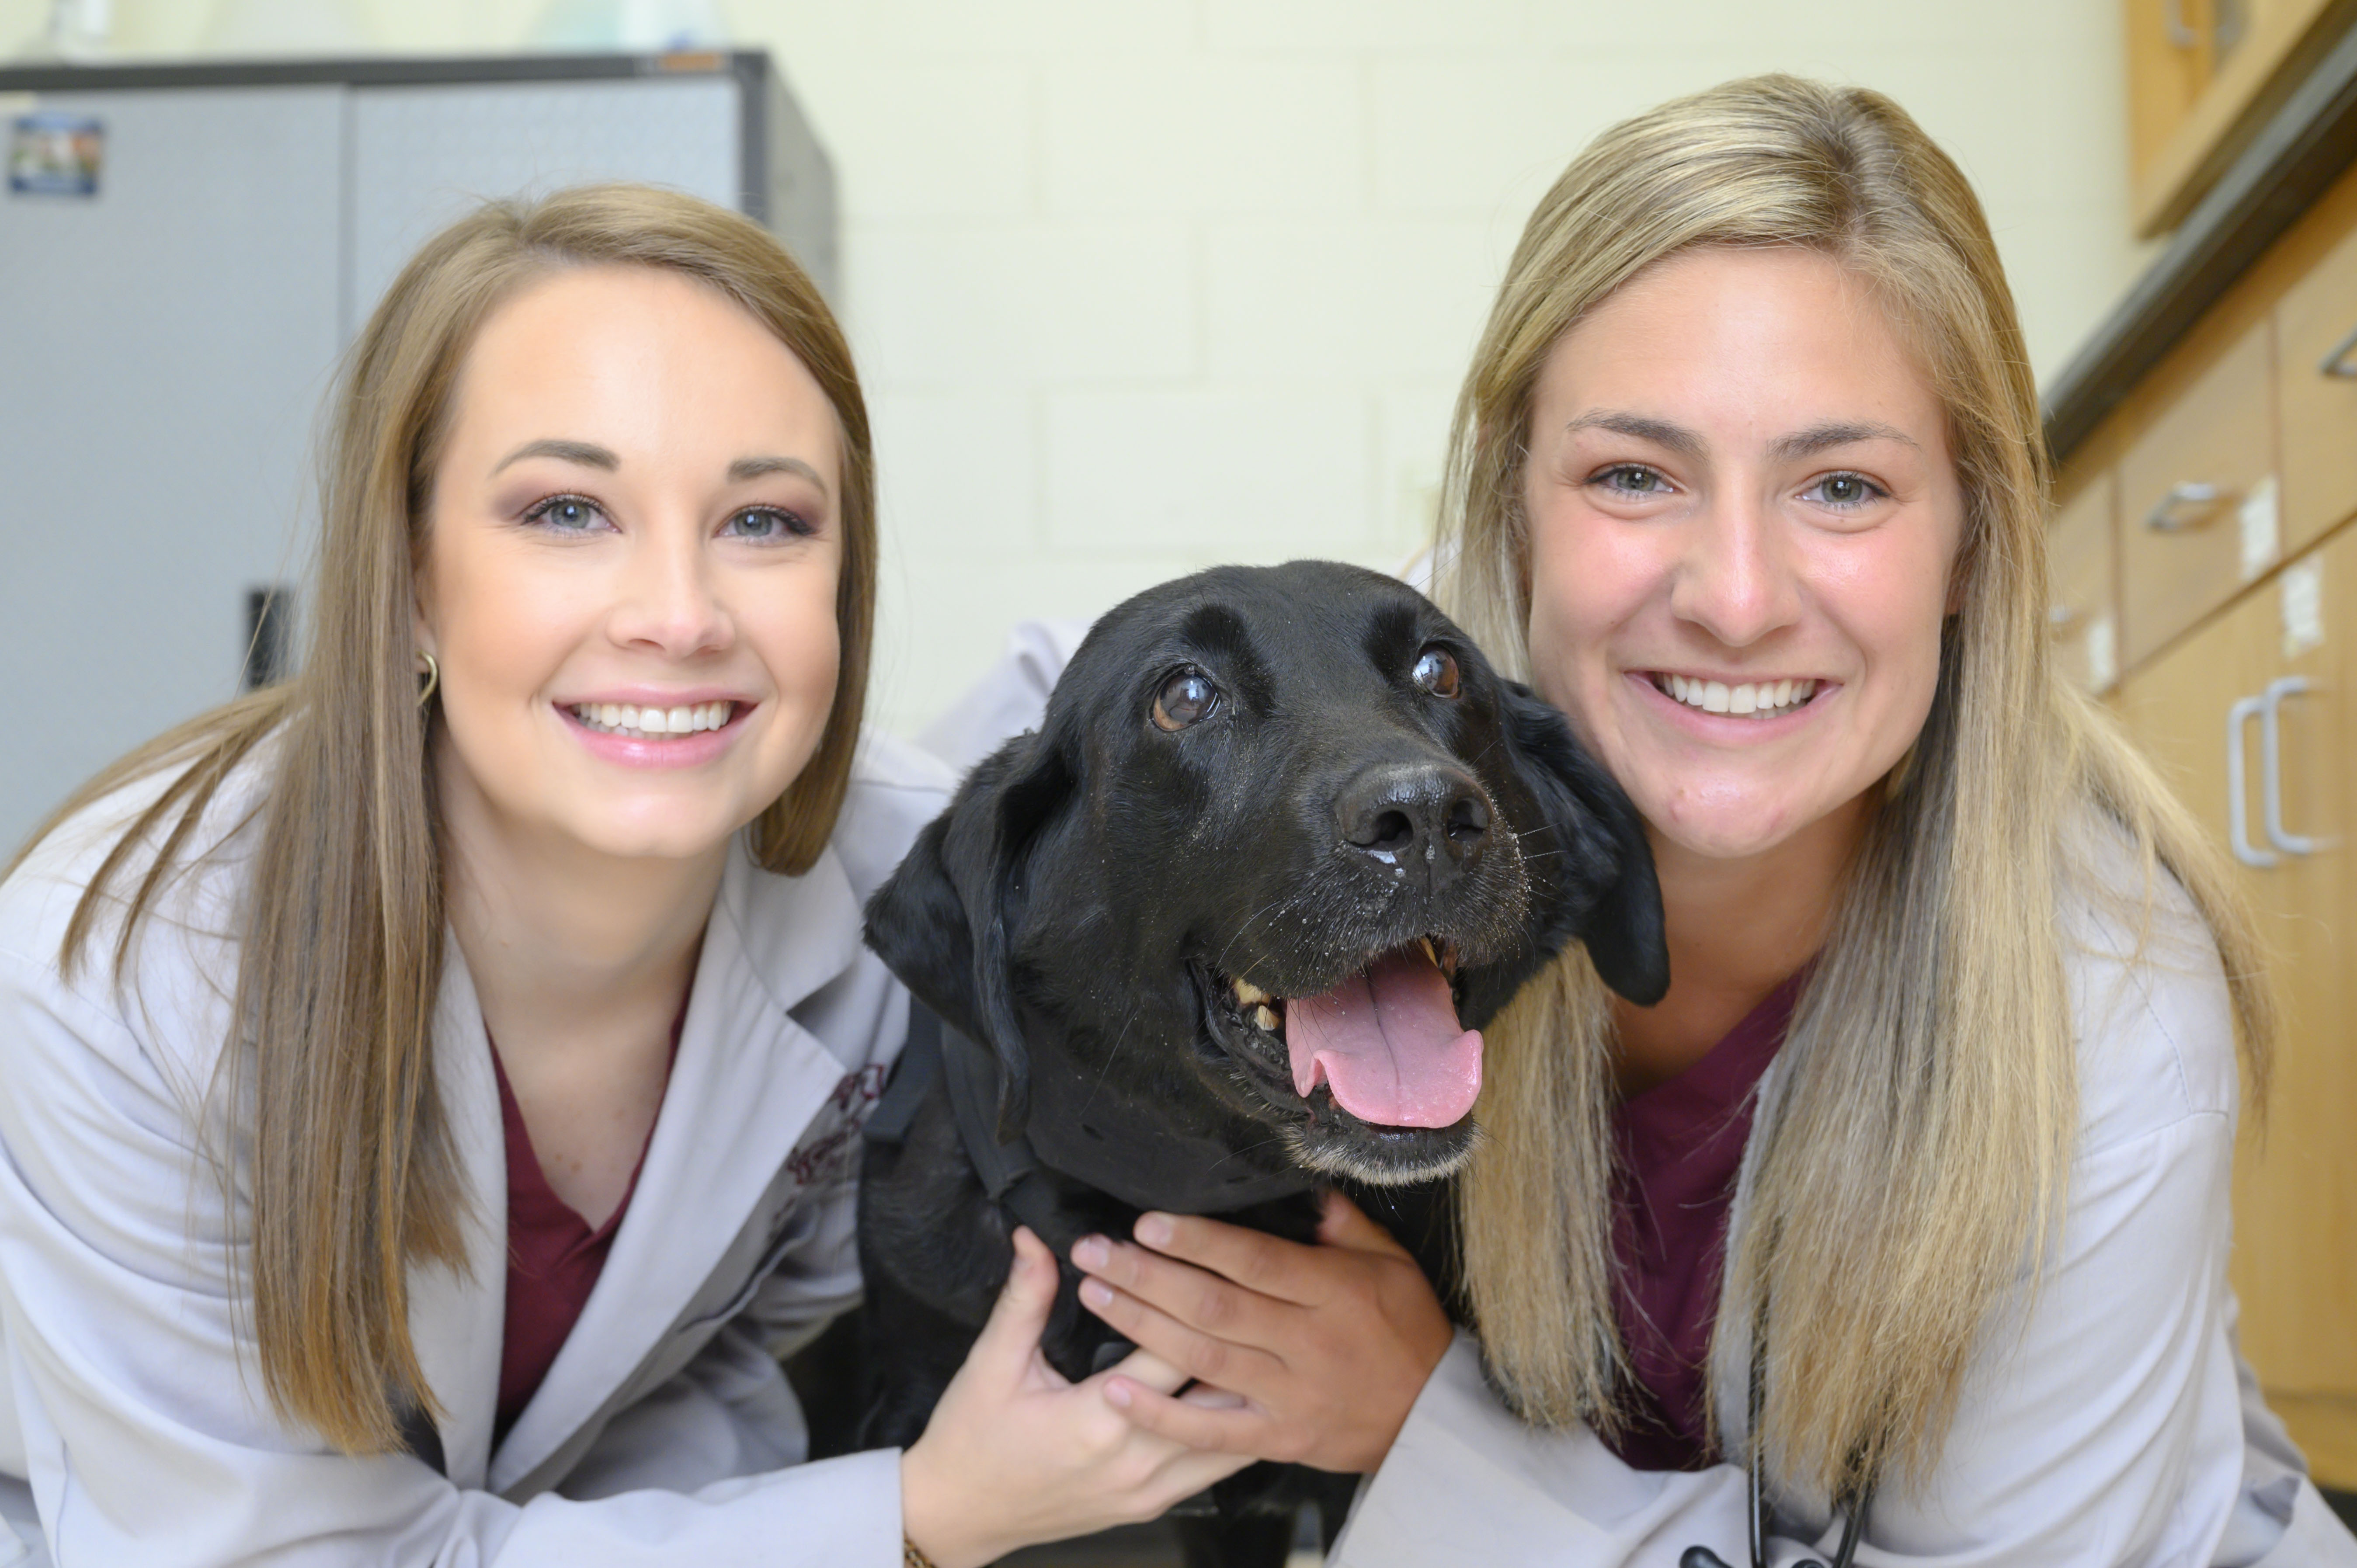 Two students pose with a black Labrador retriever